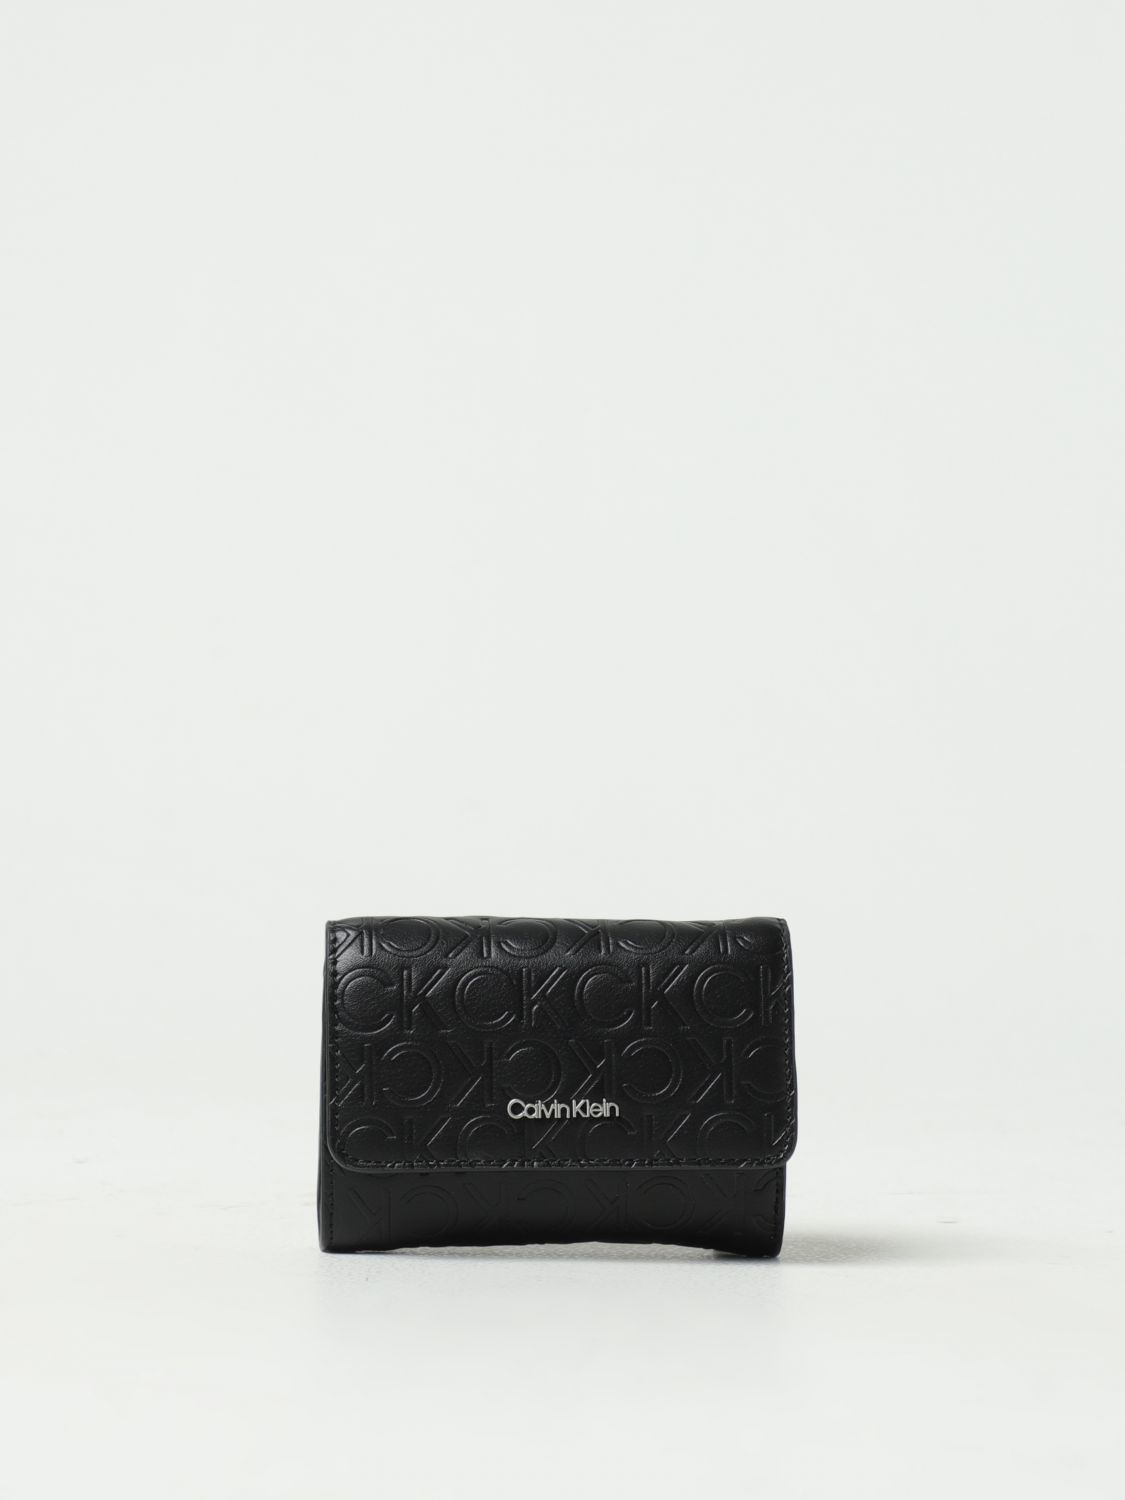 Calvin Klein Women's CK Wallet